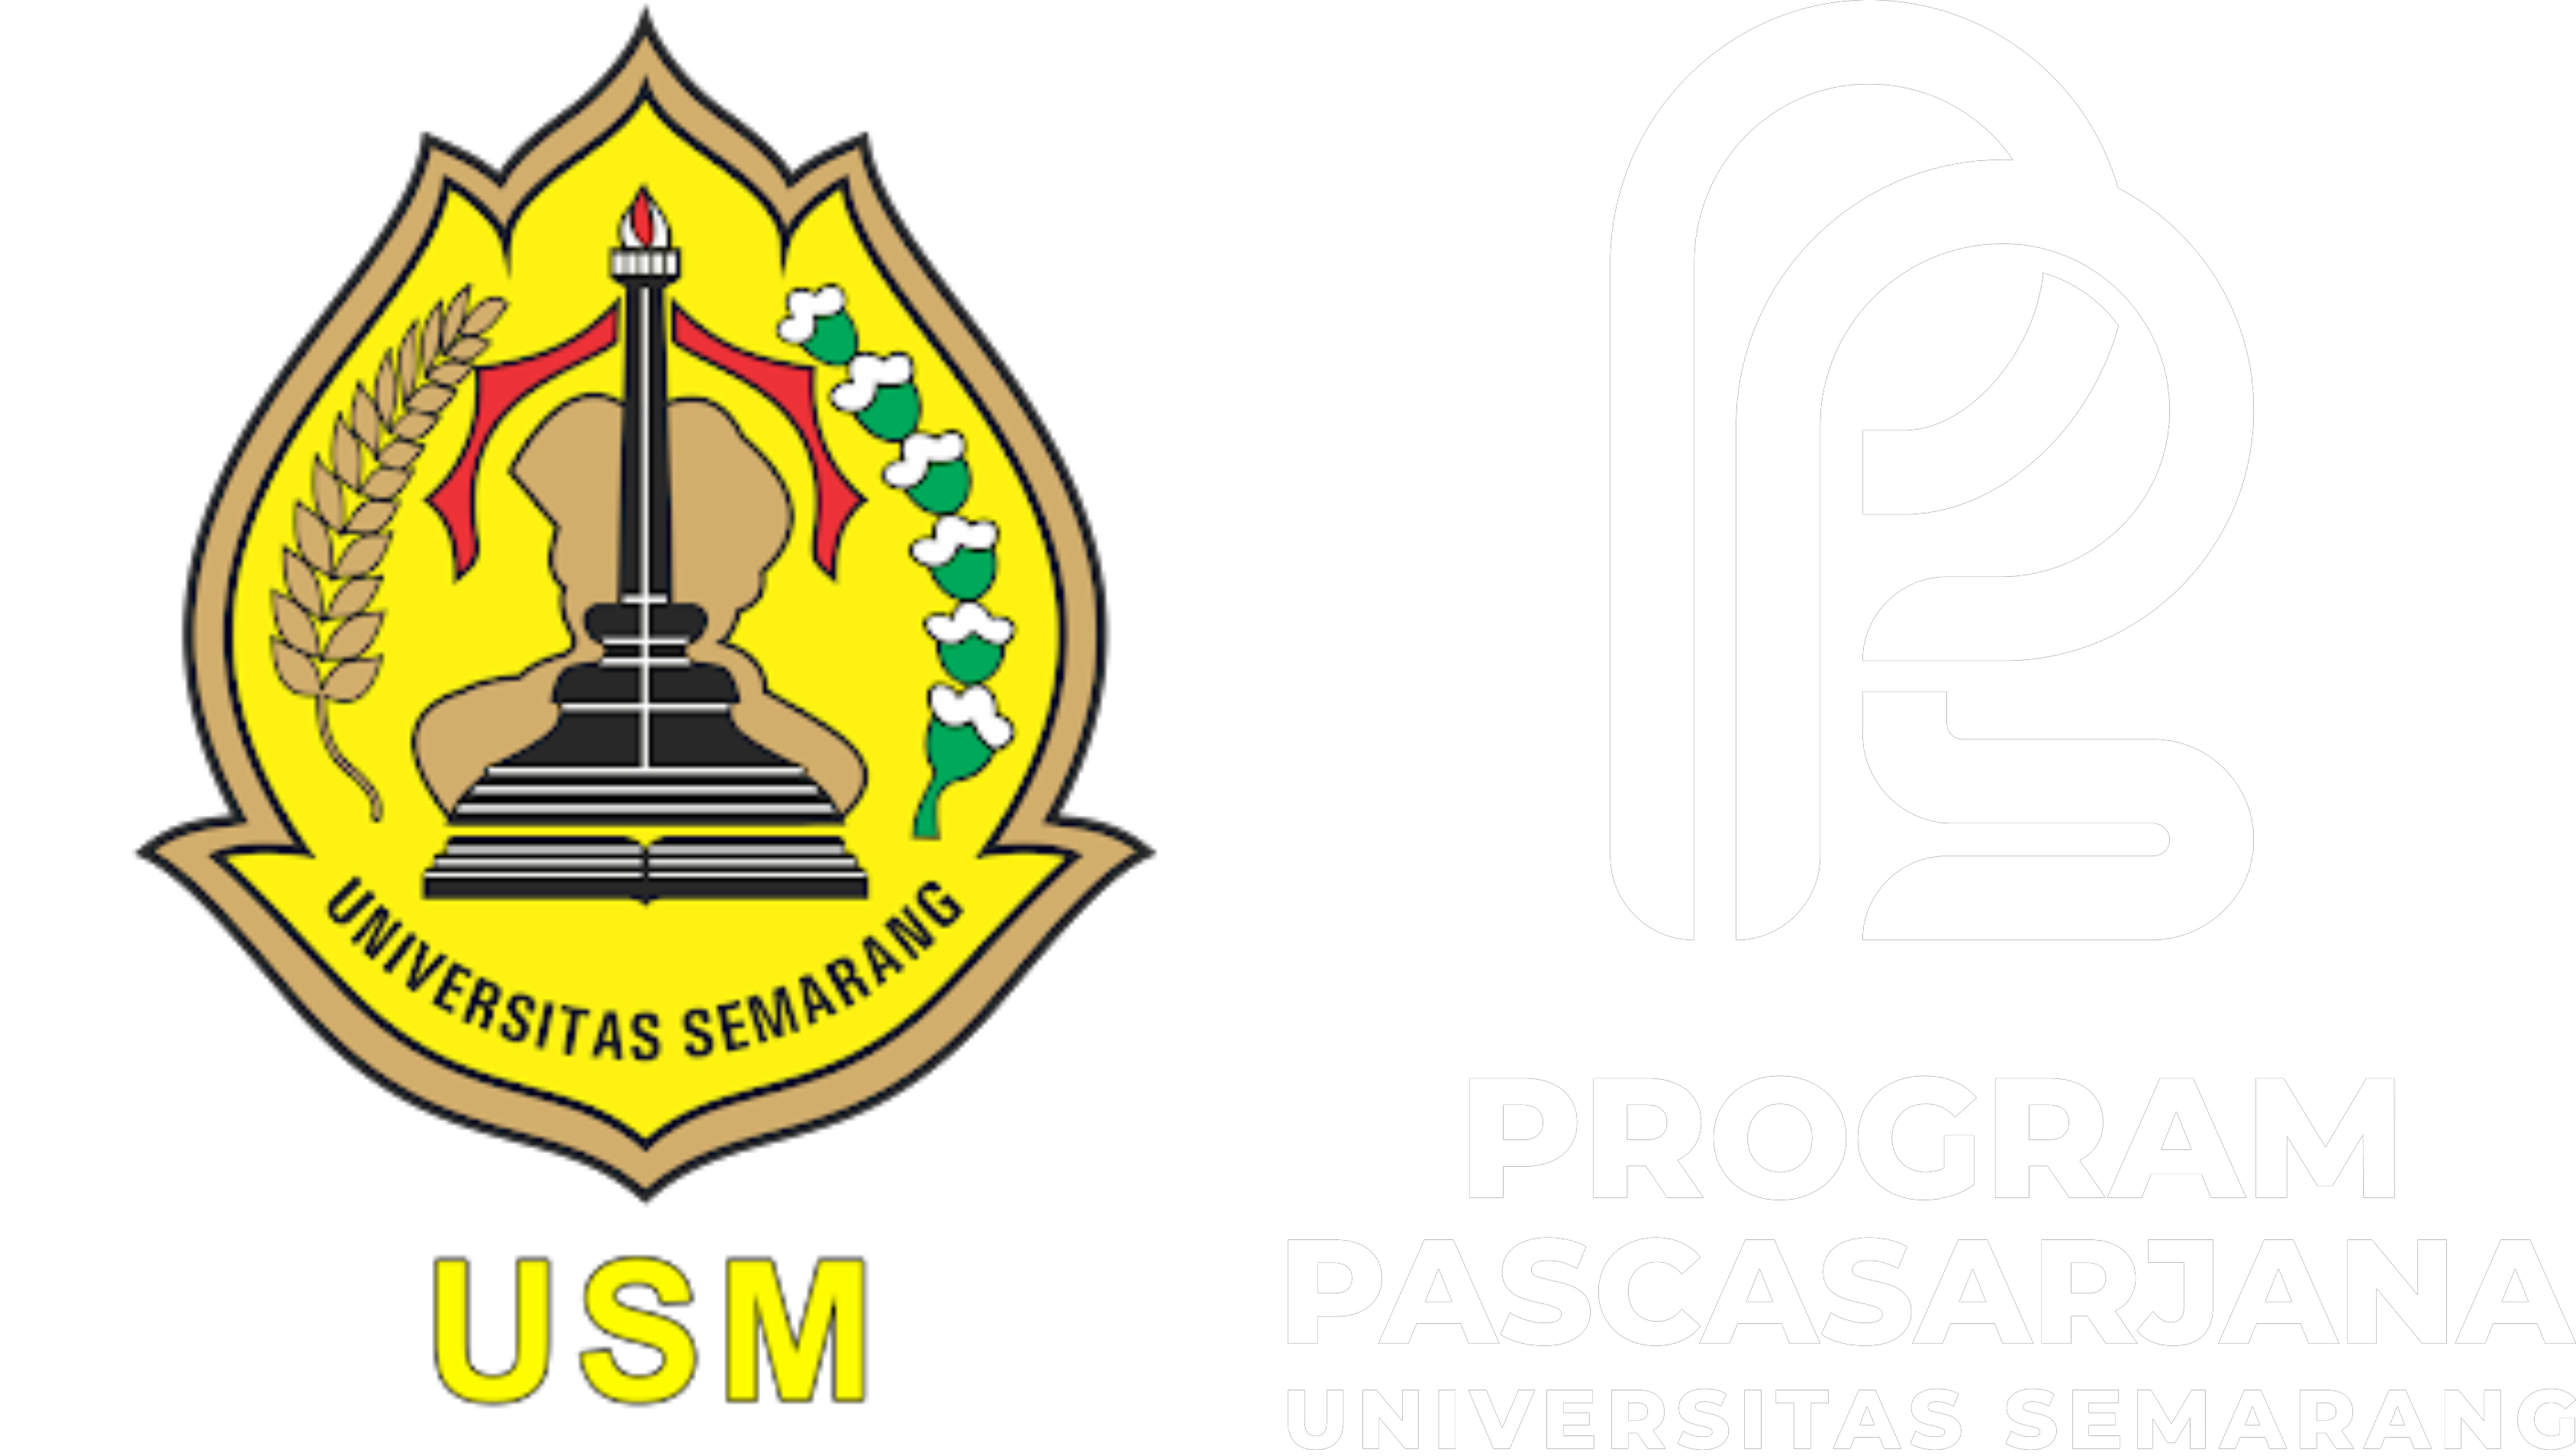 Pasca Sarjana - Universitas Semarang